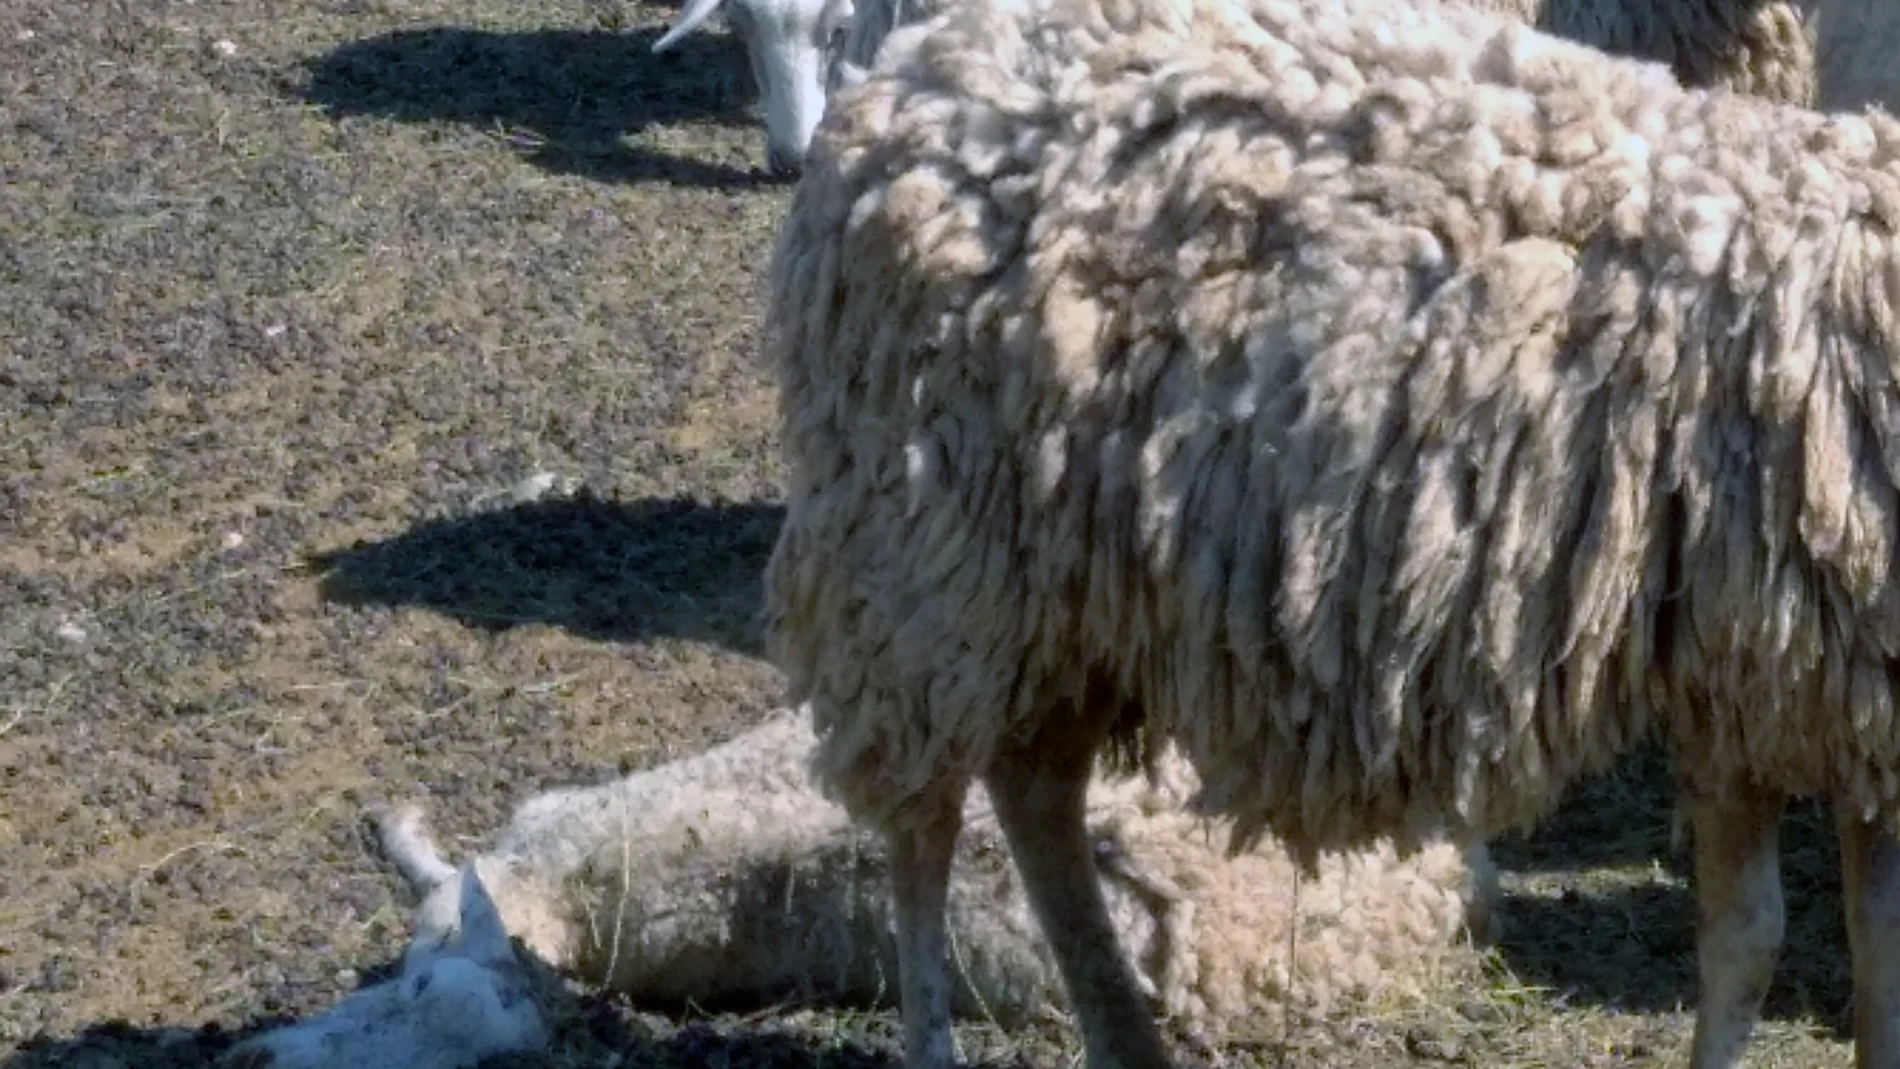 Imagen de las ovejas encontradas en la granjaGUARDIA CIVIL24/09/2021